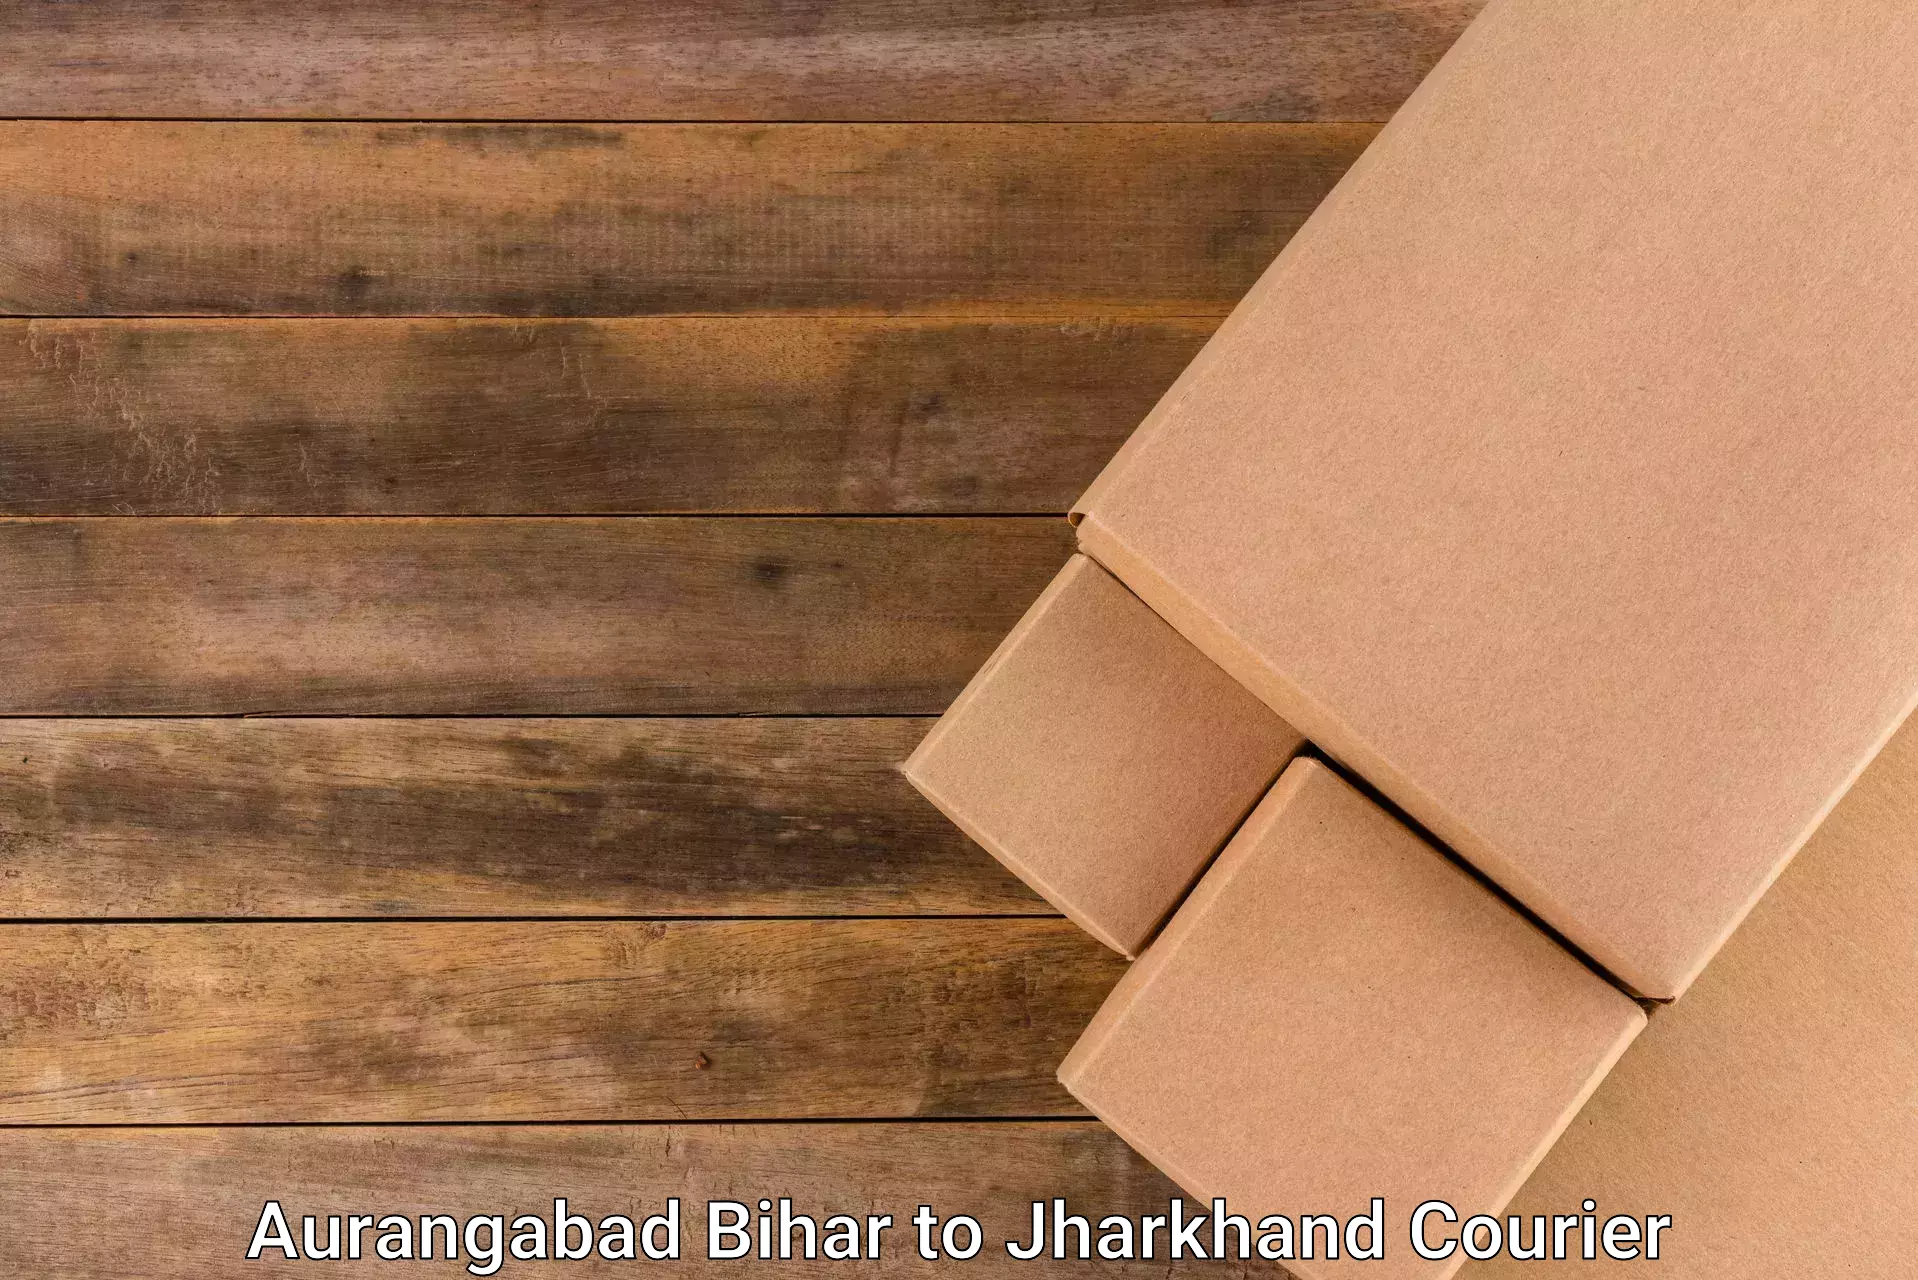 Nationwide courier service Aurangabad Bihar to Chaibasa